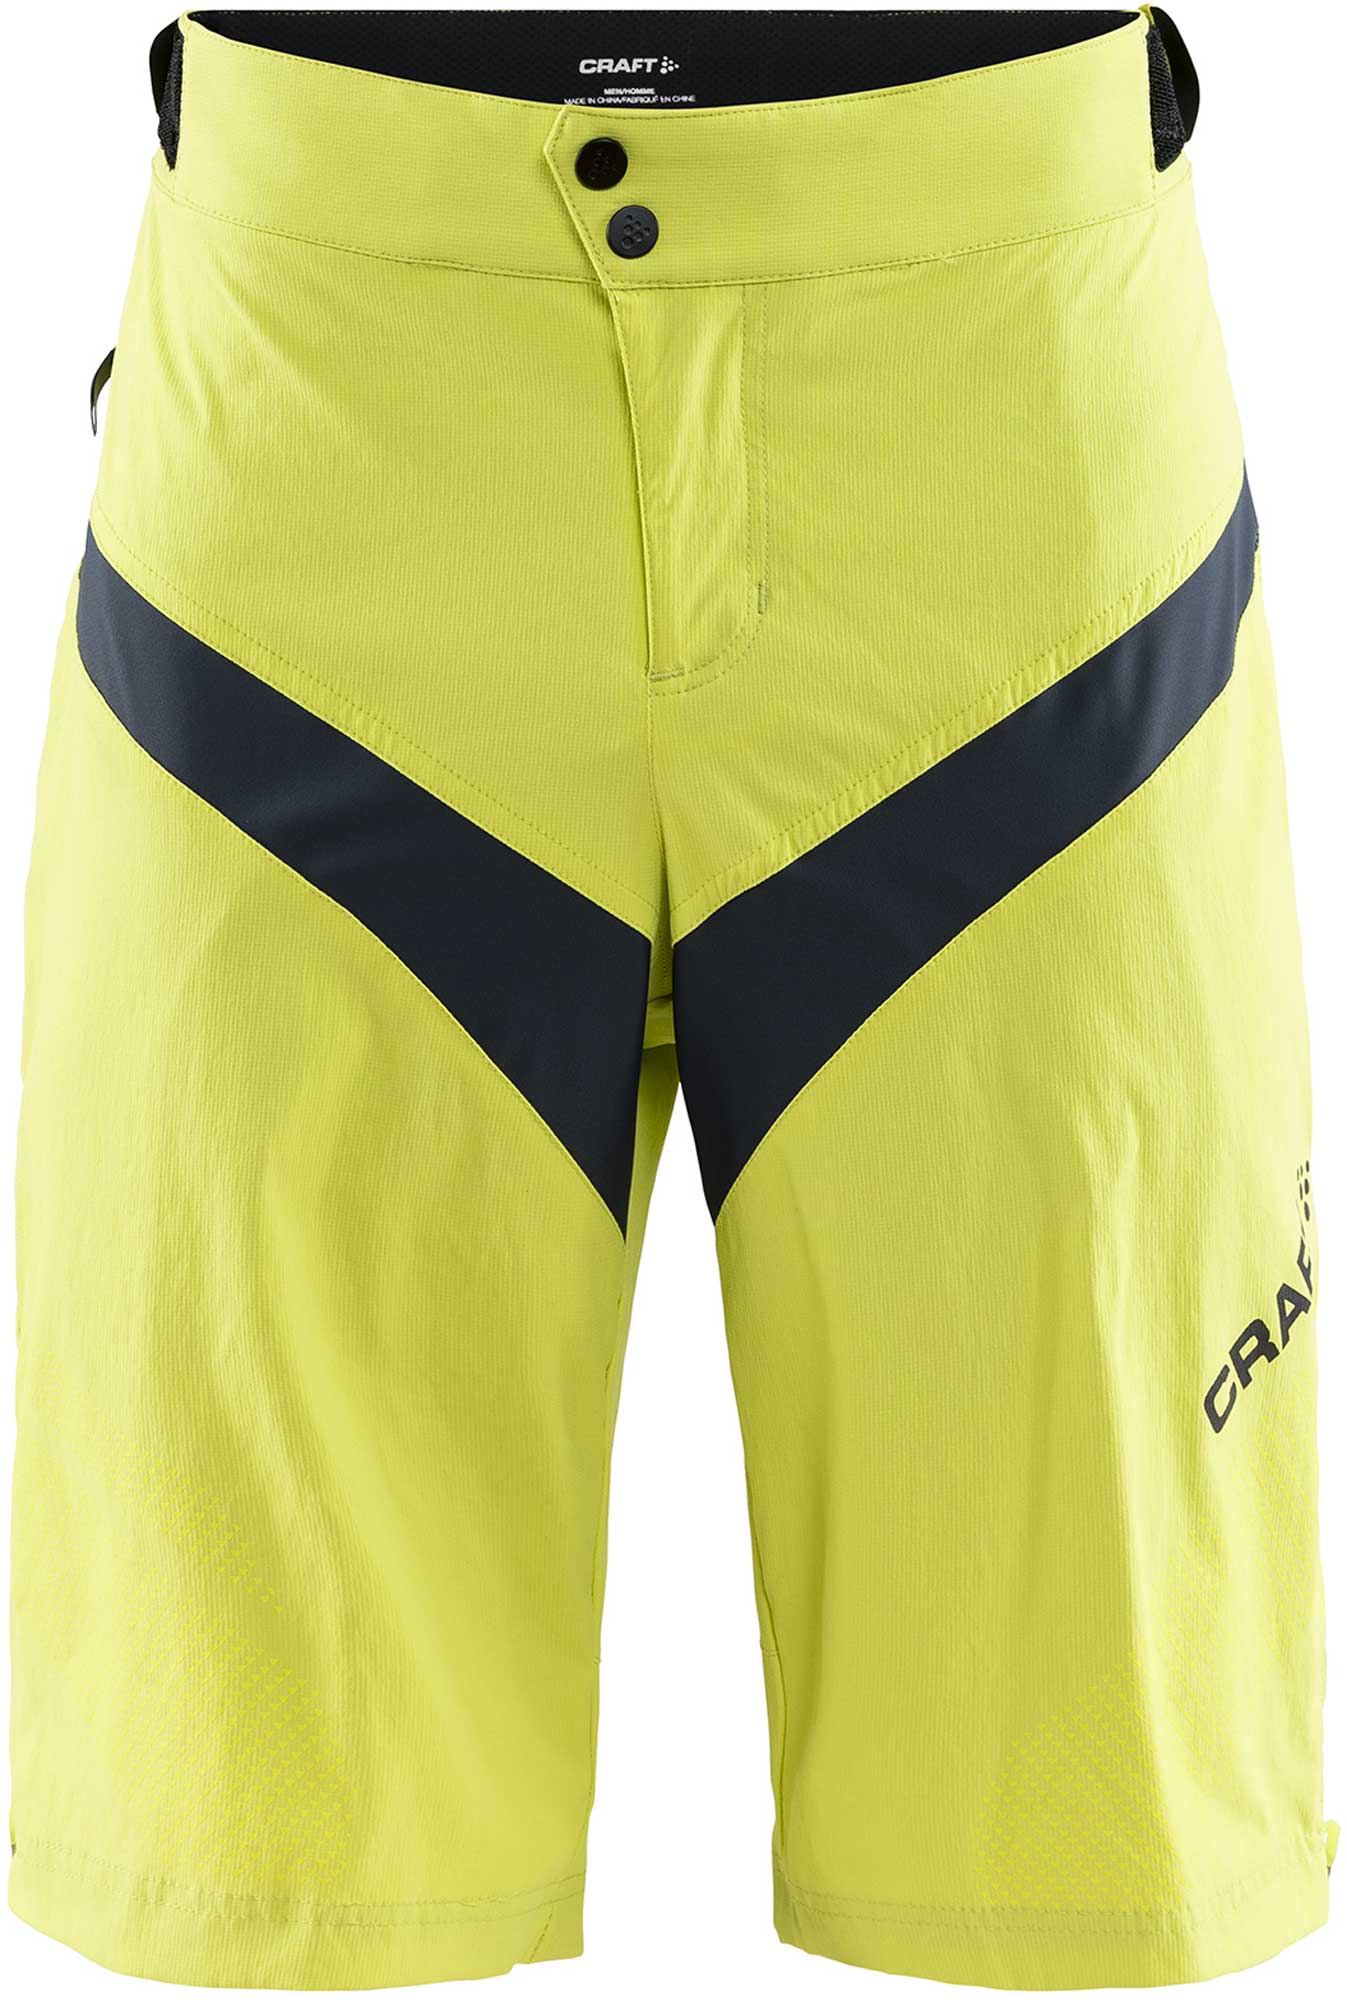 Men's cycling shorts